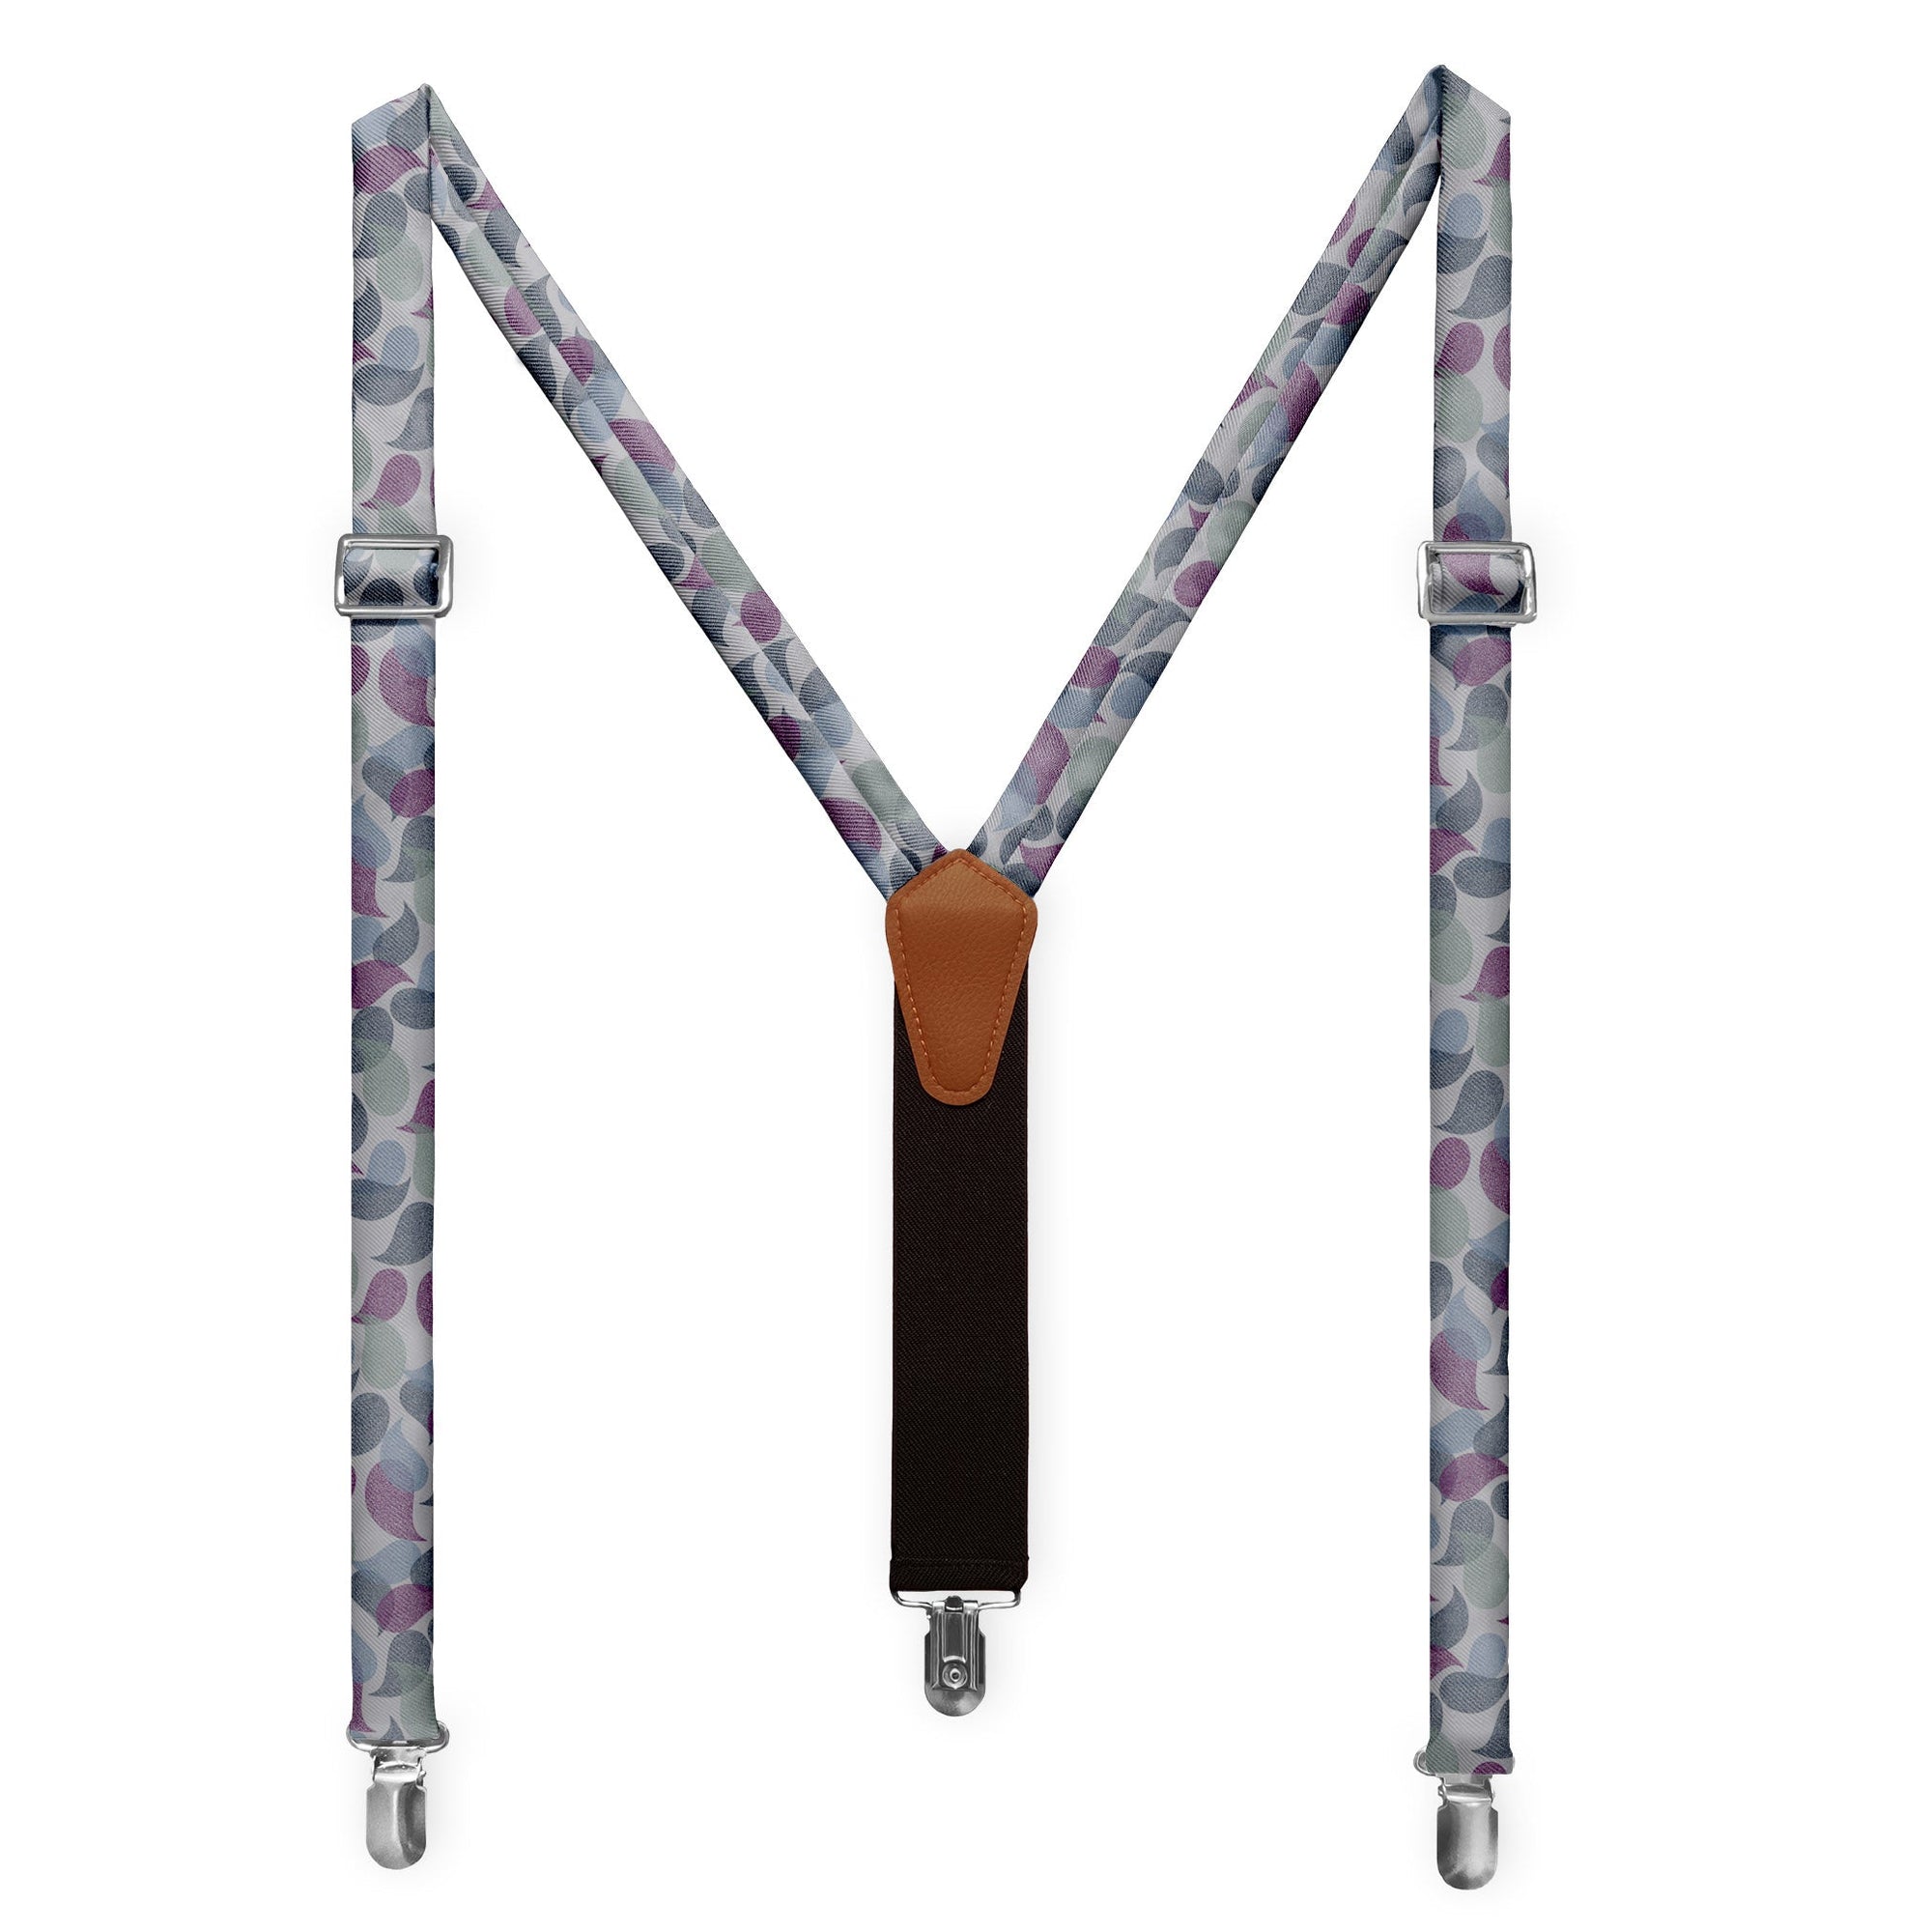 Petal Paisley Suspenders -  -  - Knotty Tie Co.